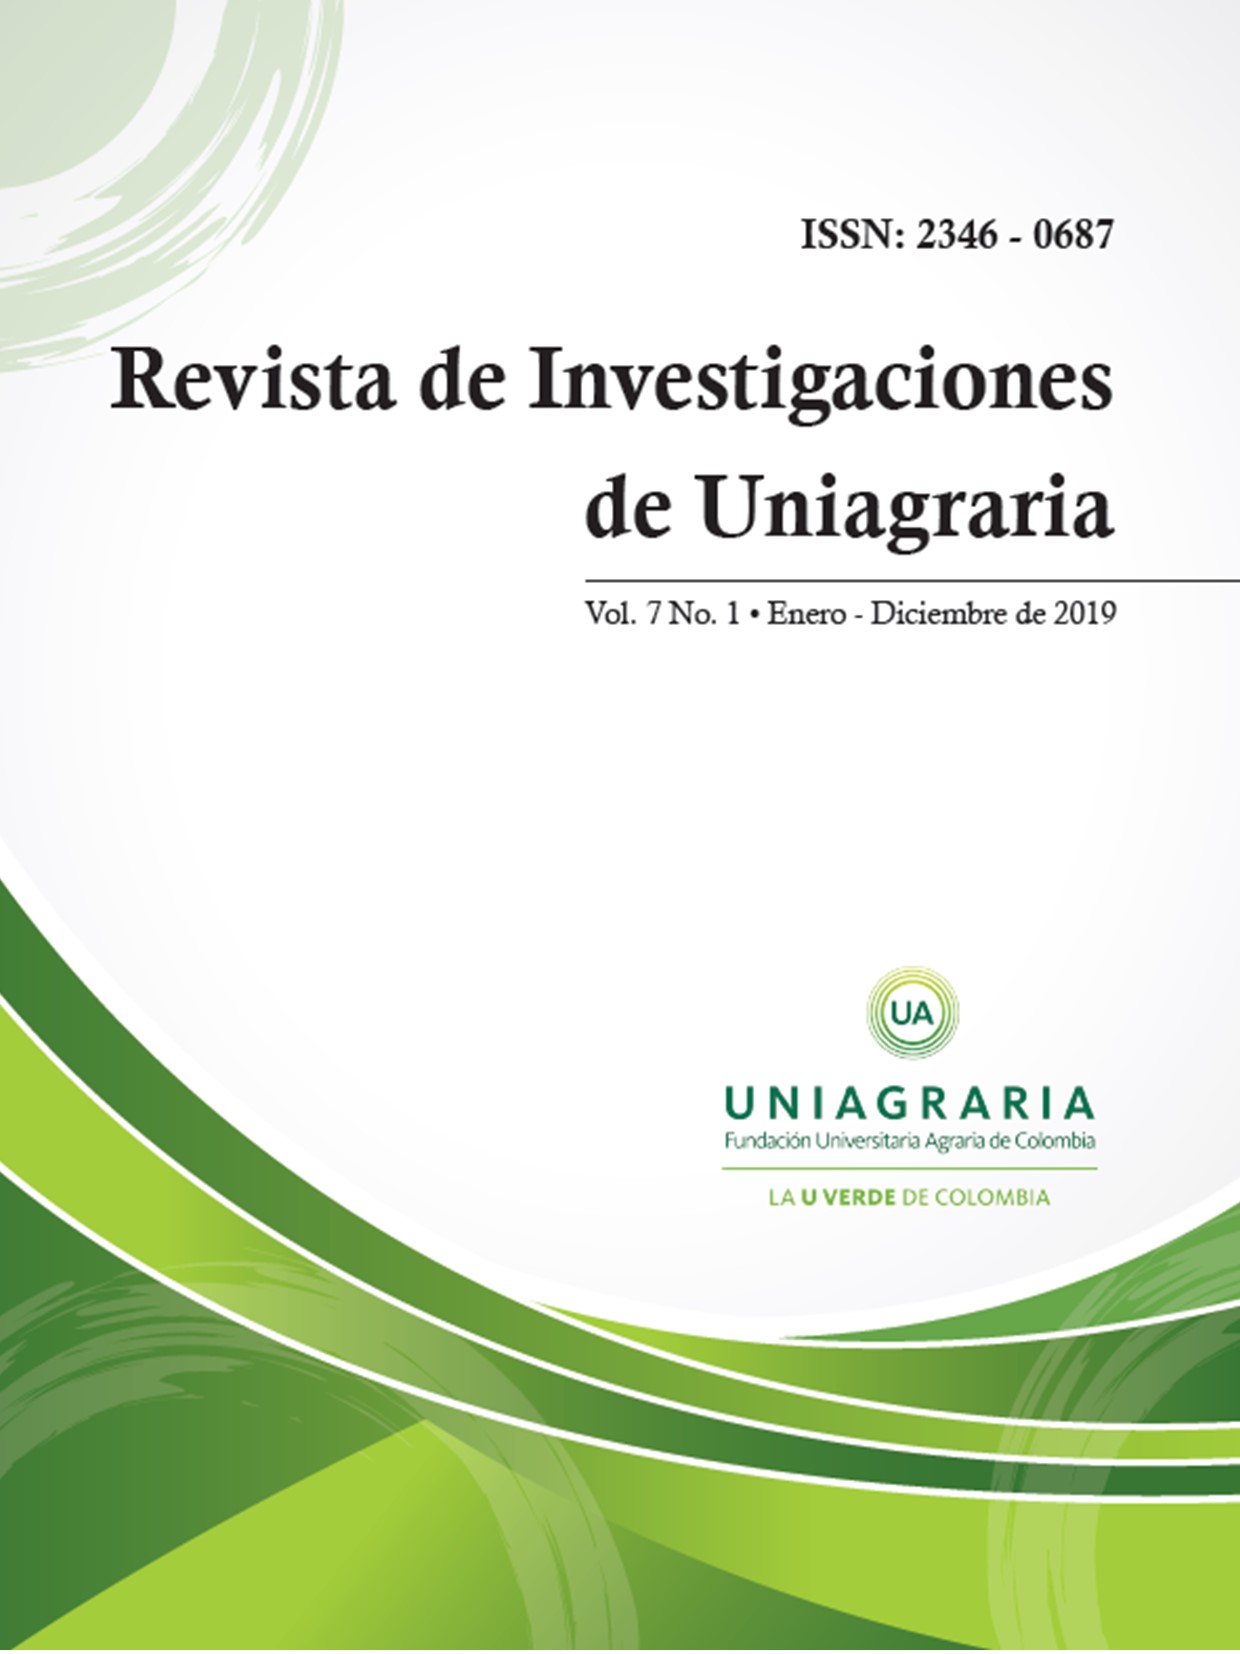 REVISTA DE INVESTIGACIONES DE UNIAGRARIA Vol. 7 Enero-diciembre 2019